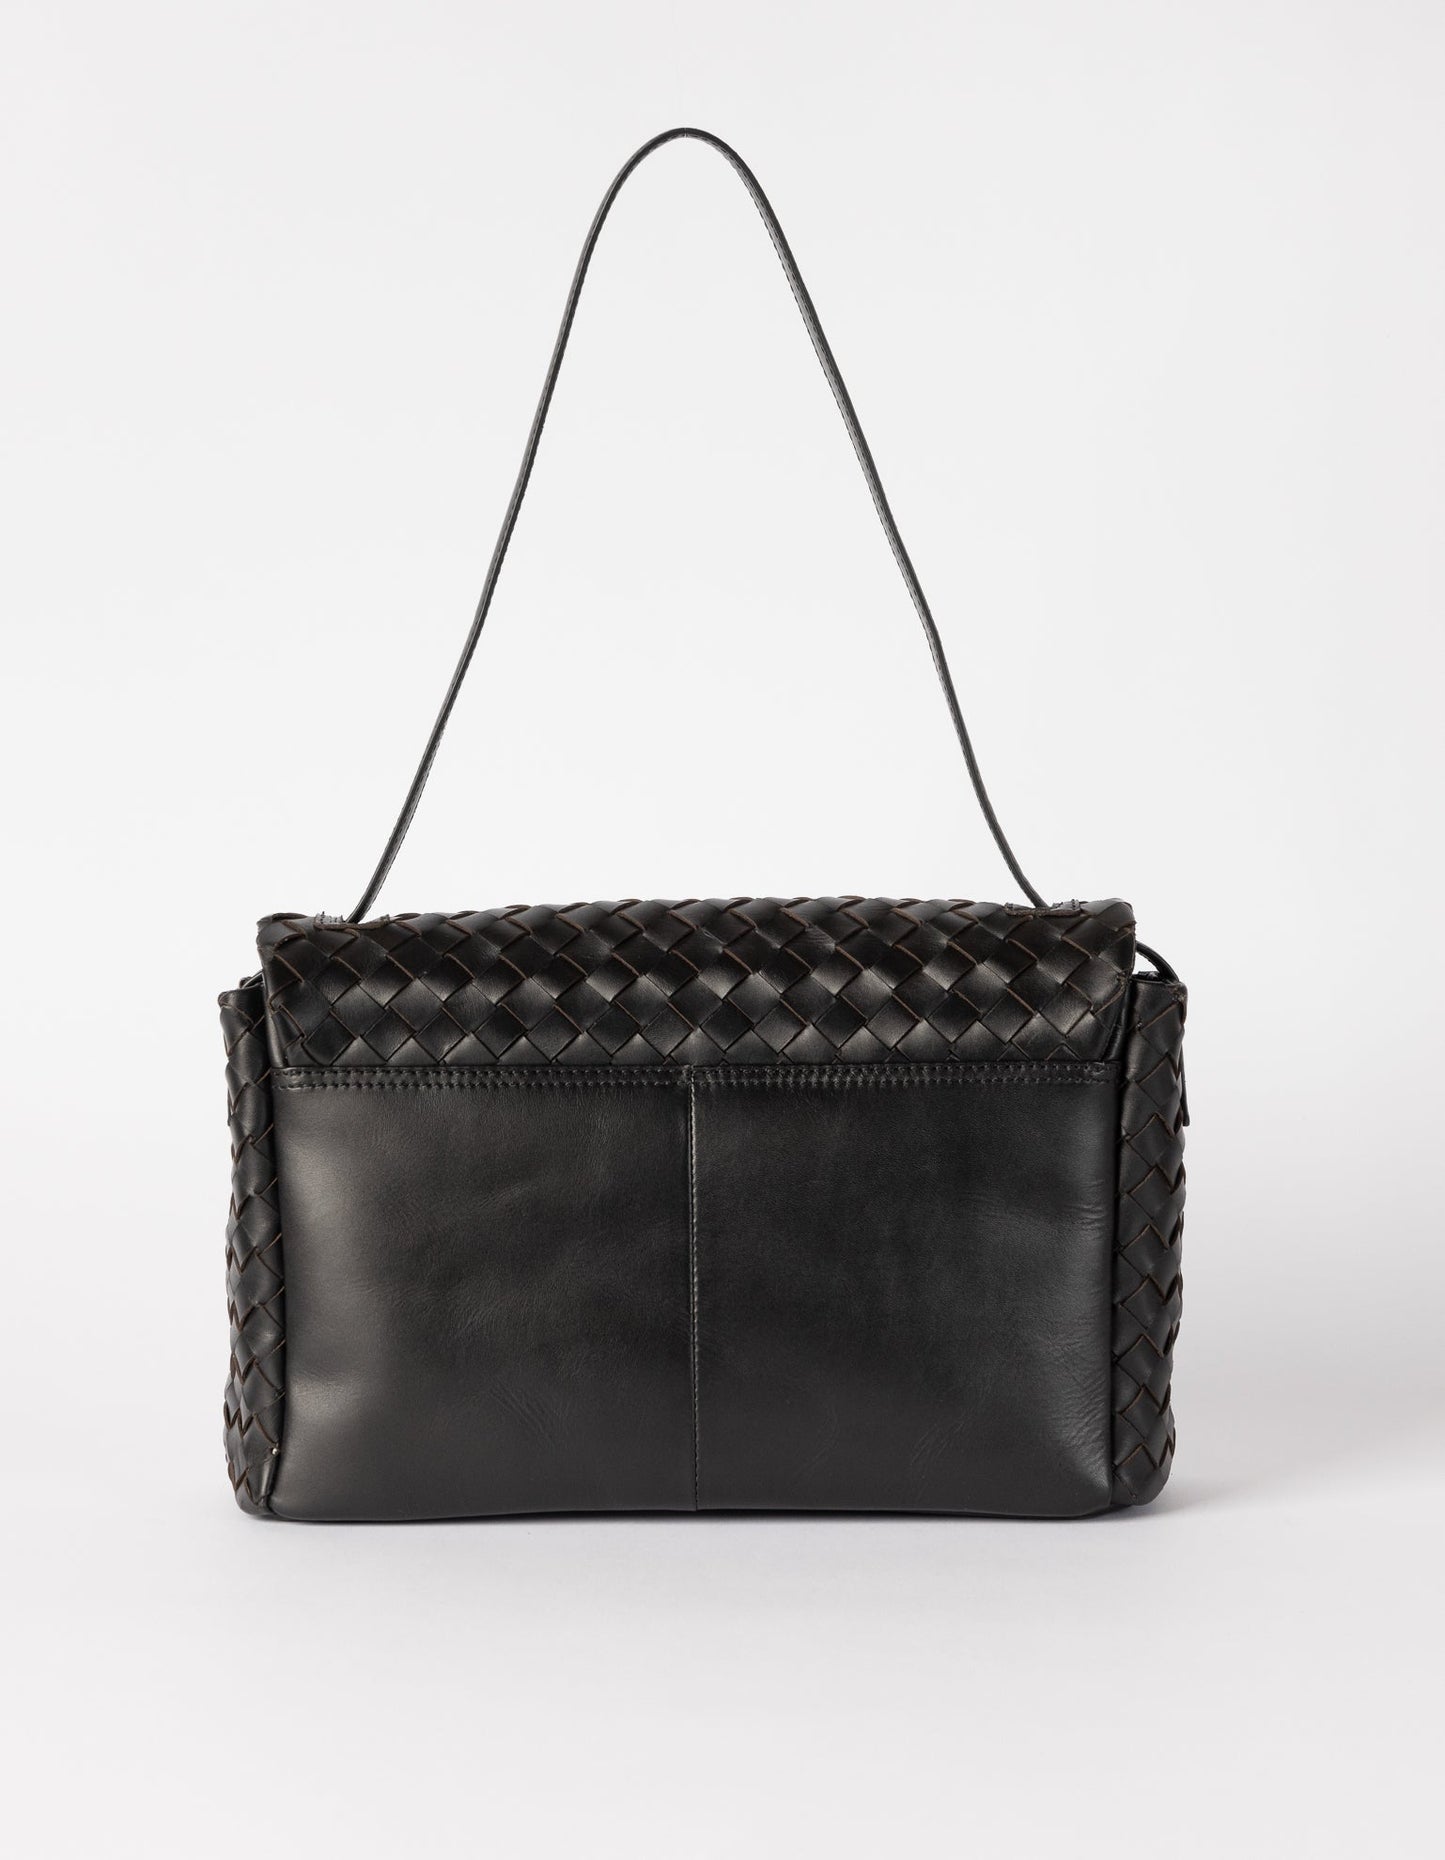 omybag - Kenzie Black Woven Classic Leather